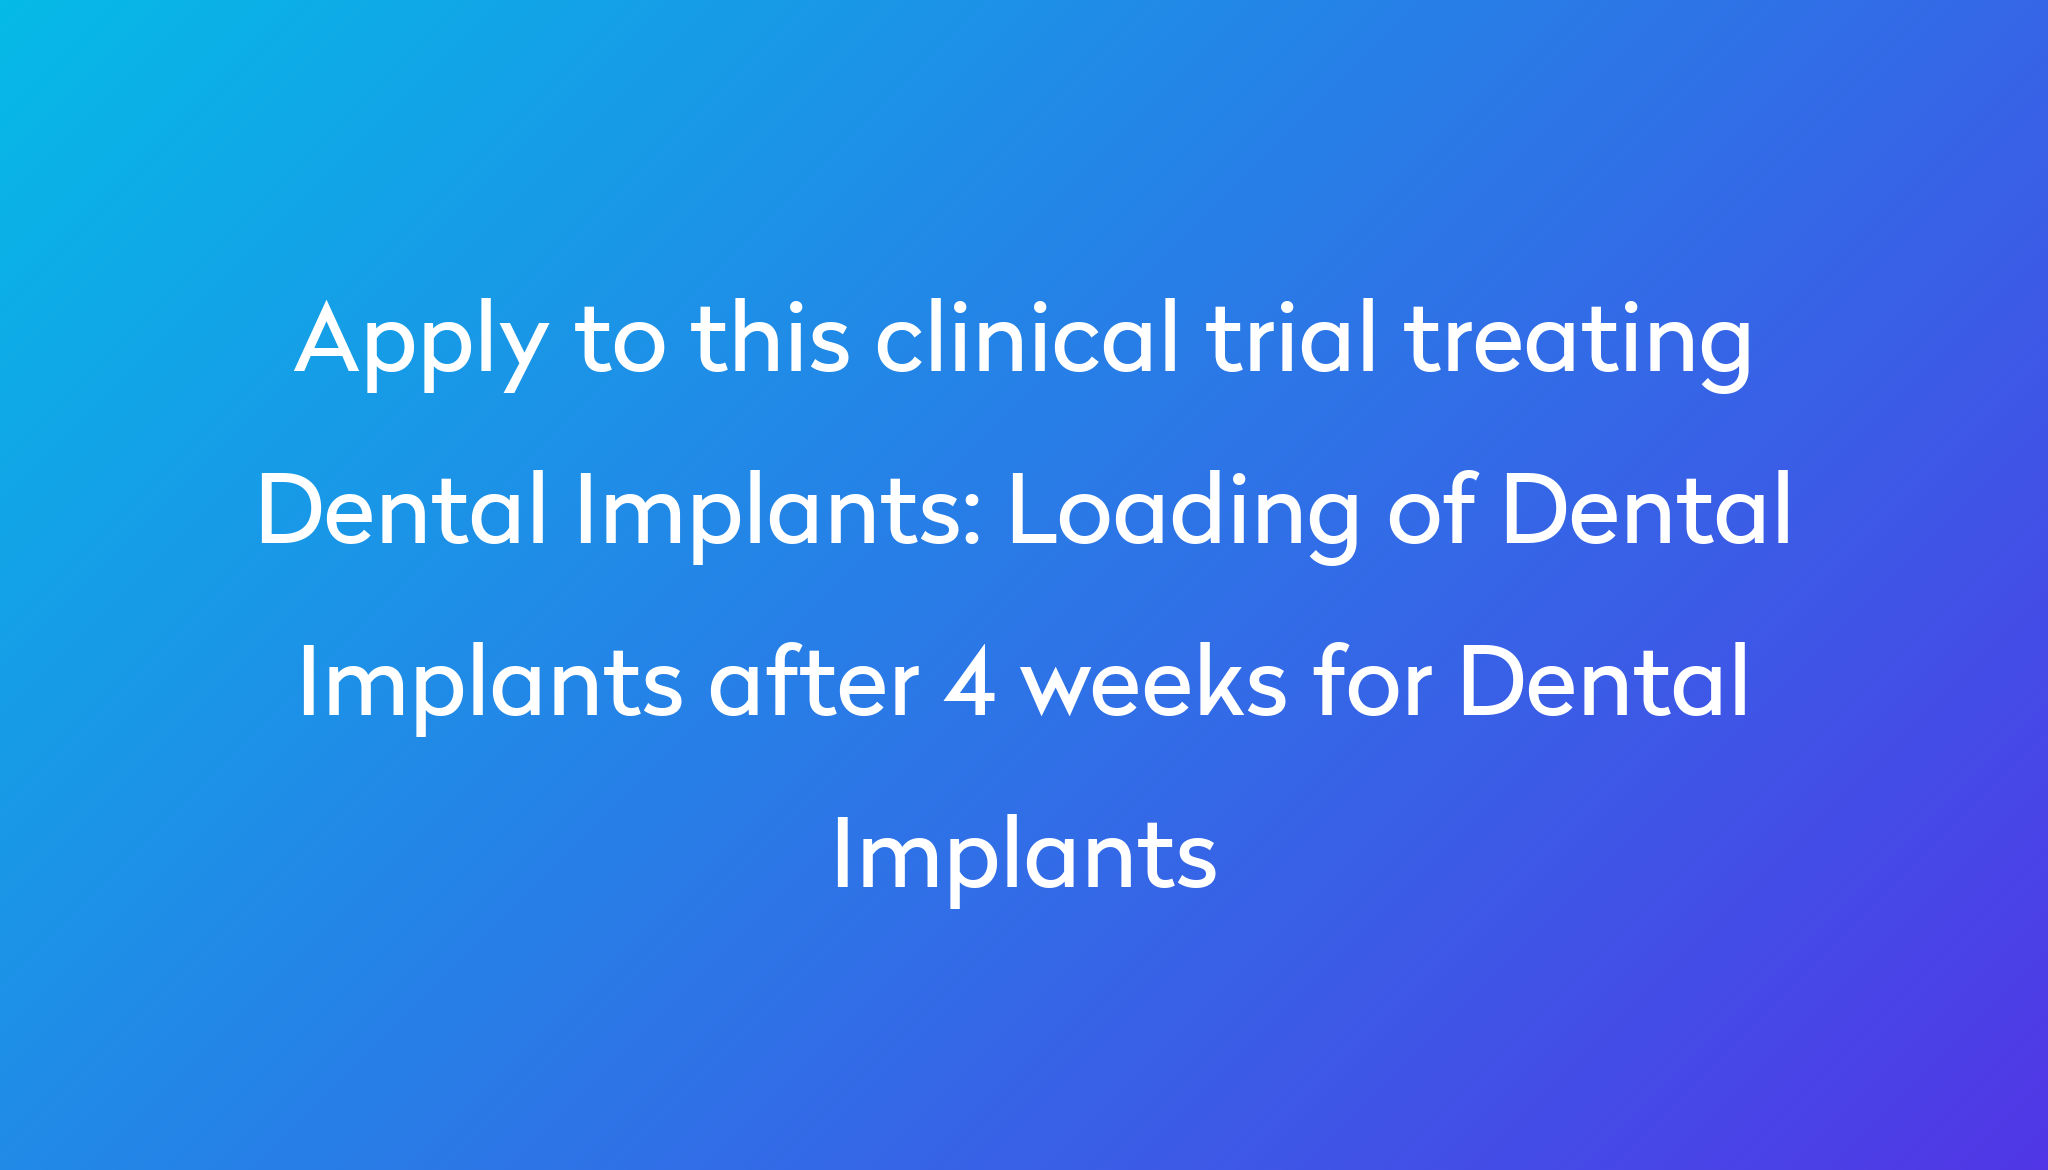 Loading of Dental Implants after 4 weeks for Dental Implants Clinical